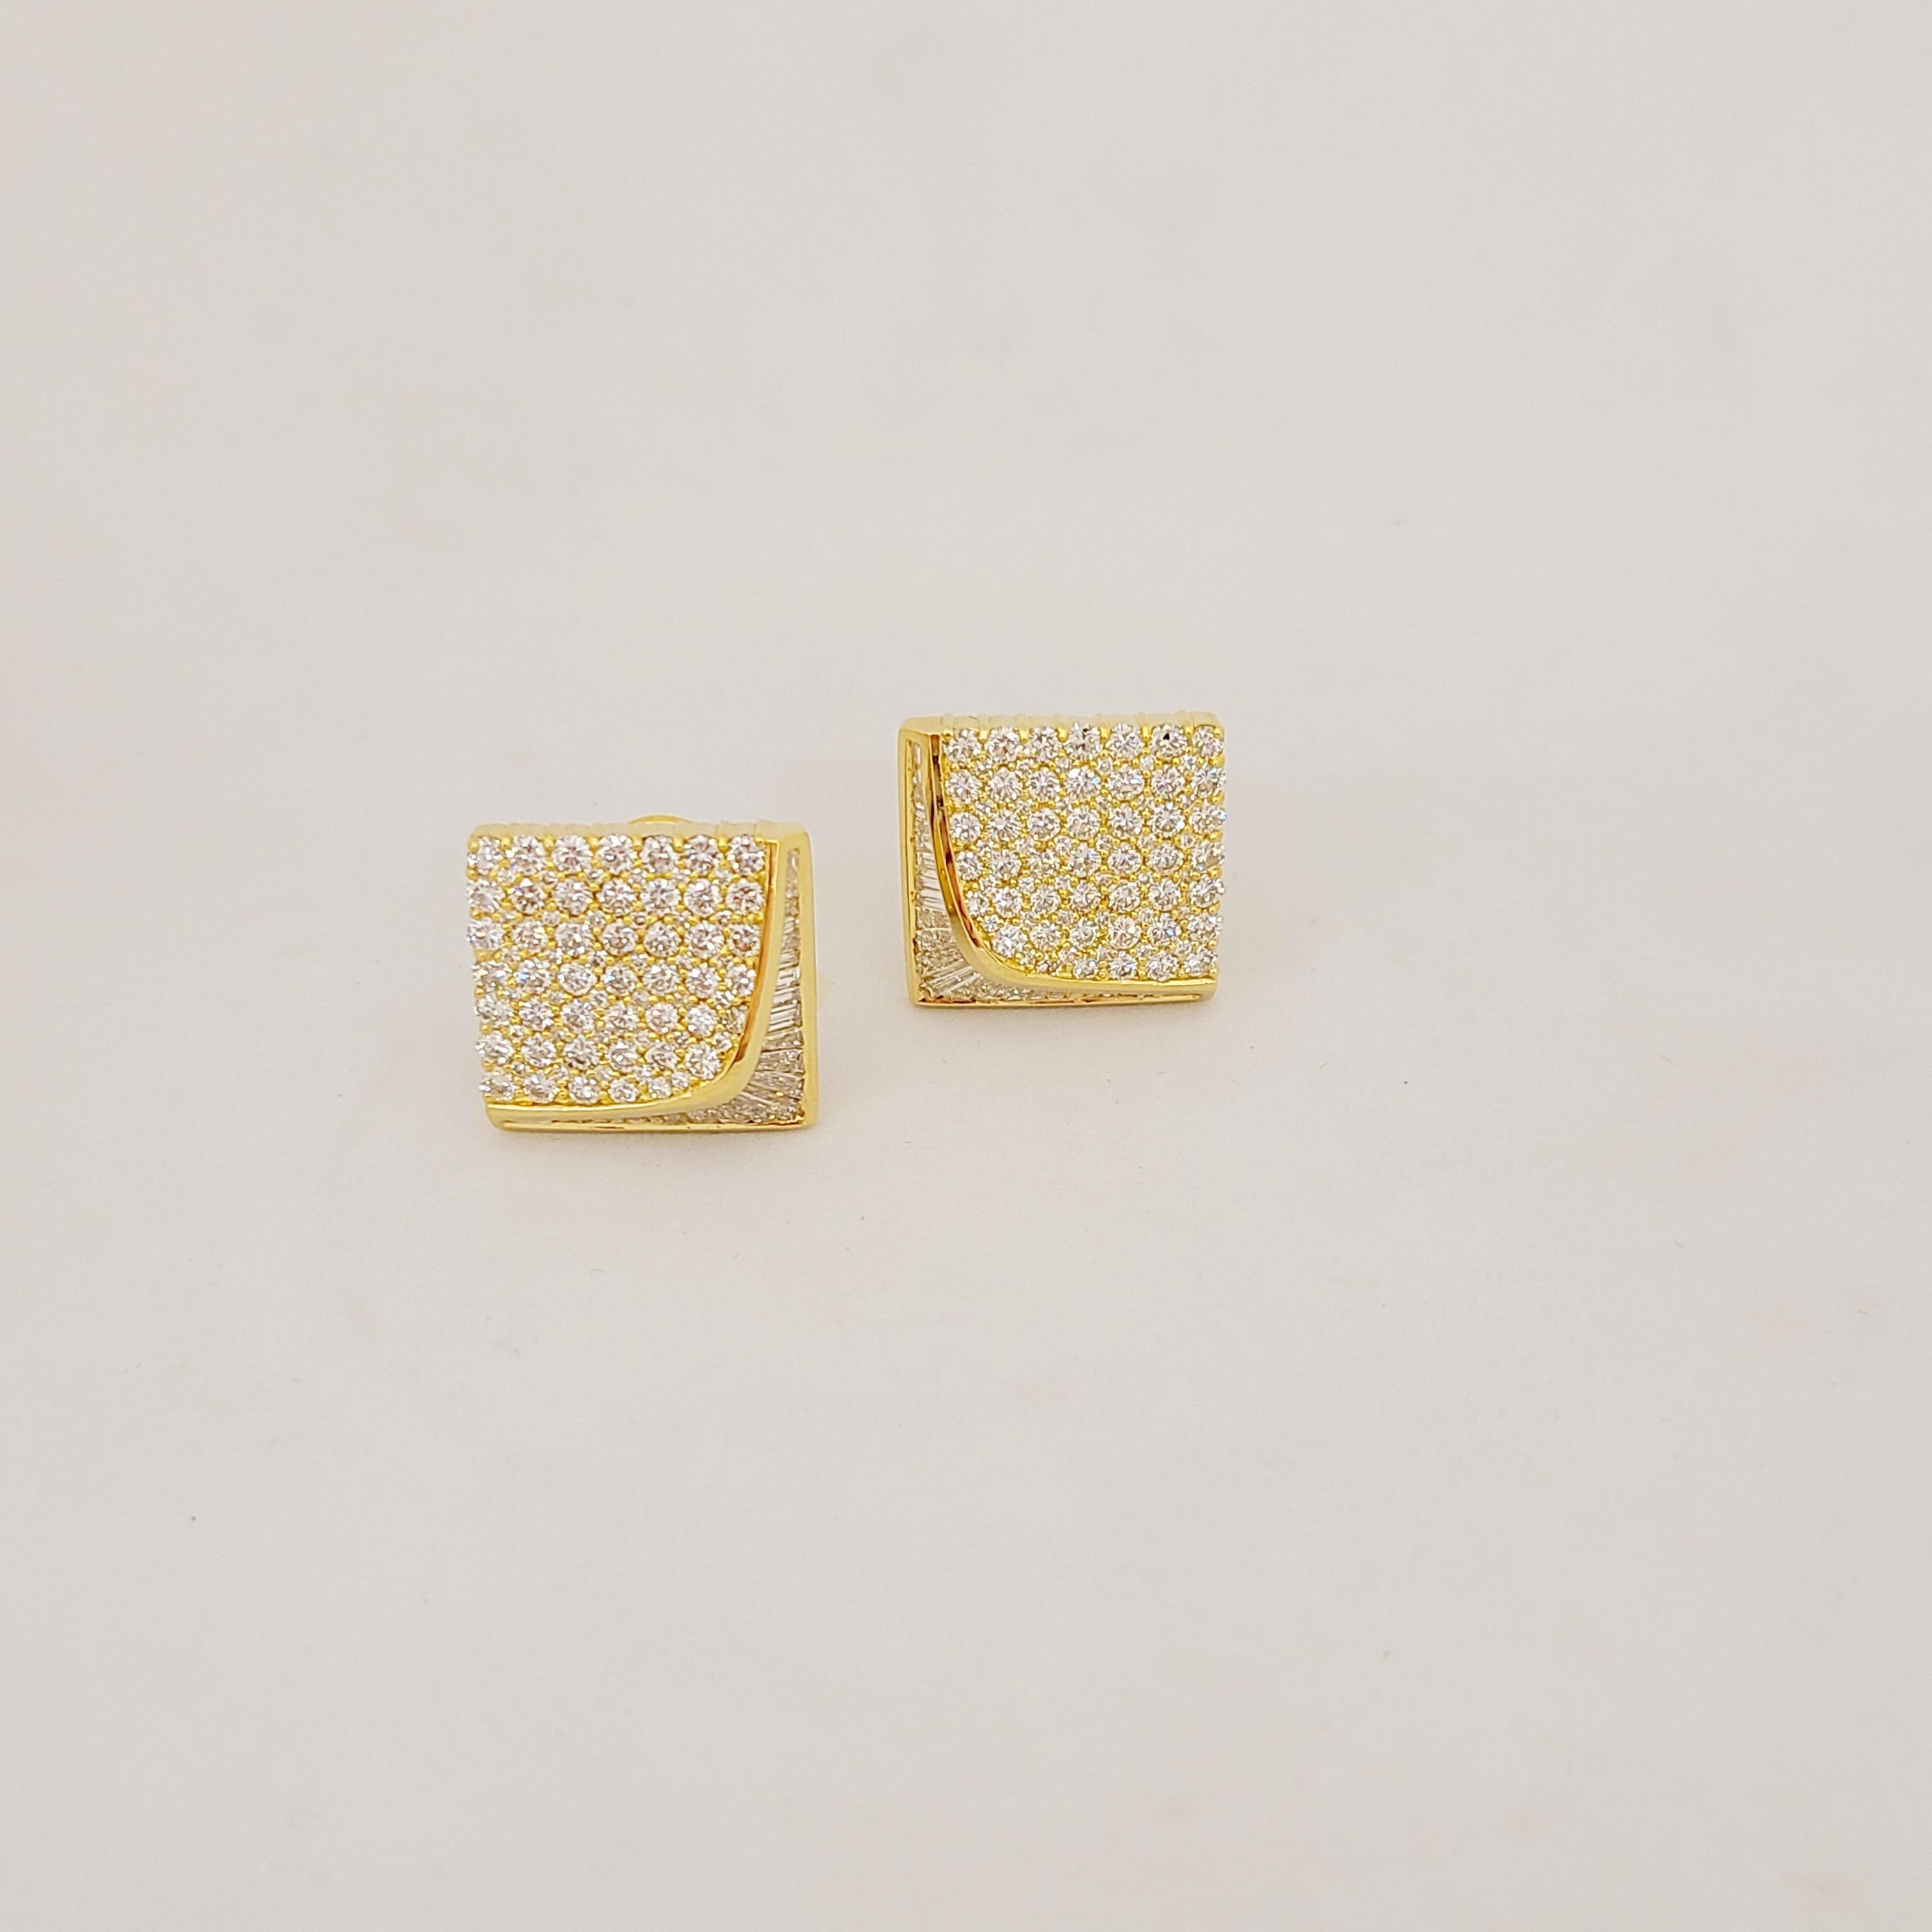 Baguette Cut Nova 18 Karat Yellow Gold, 6.88 Carat Diamond Square Shaped Earrings For Sale